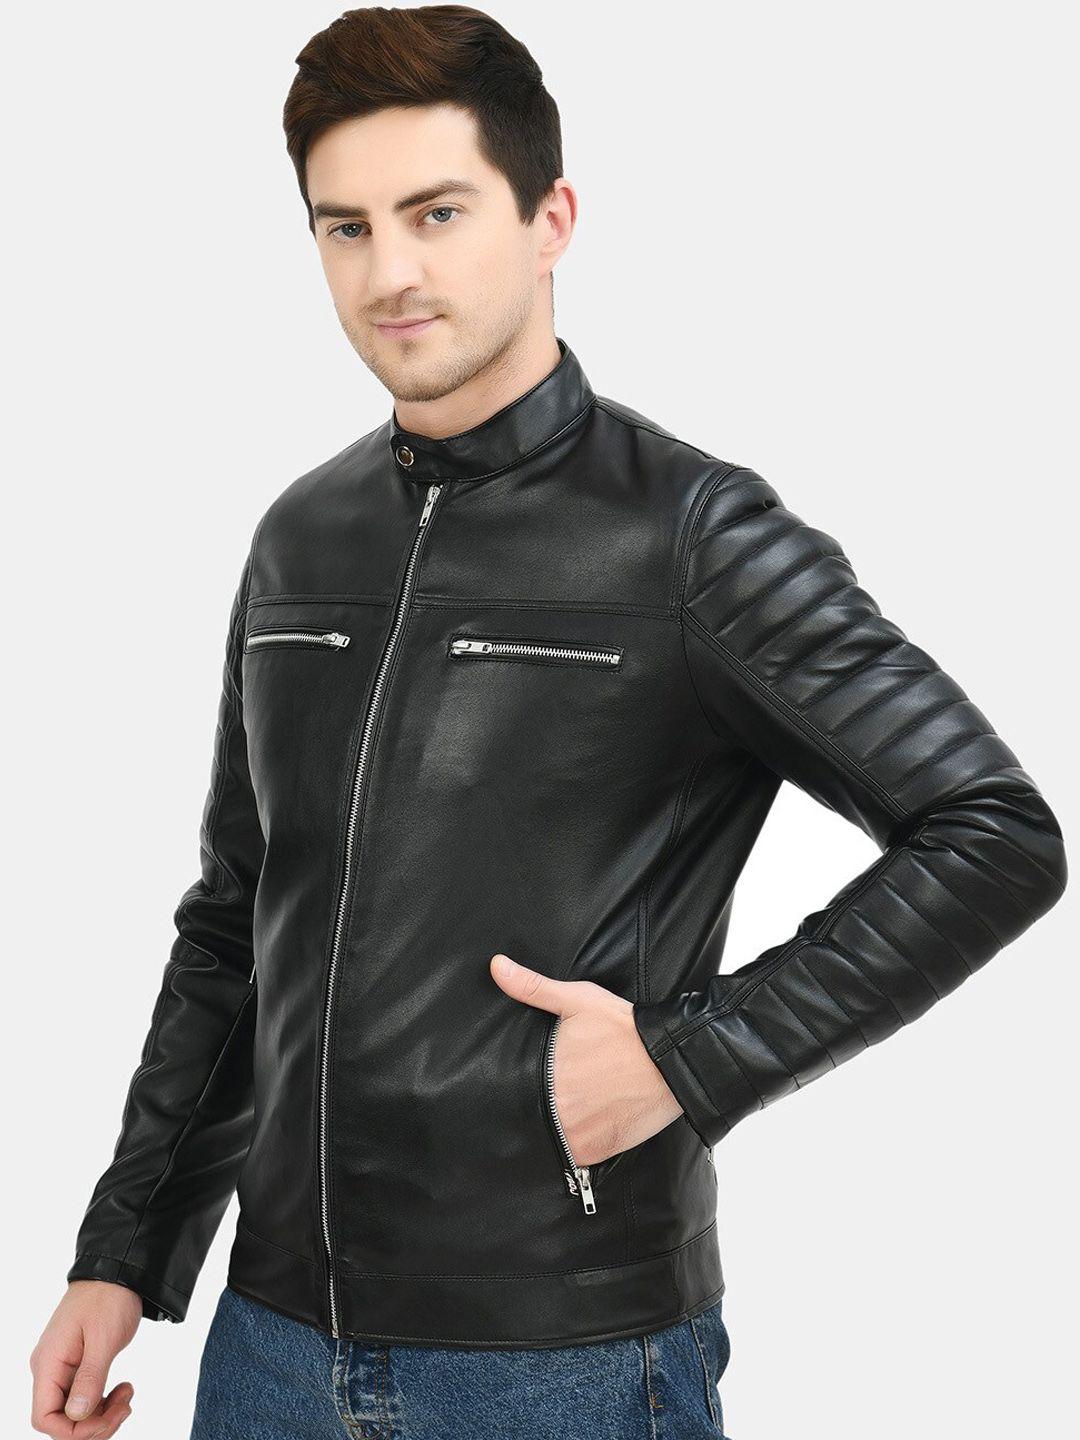 tboj stand collar anti odour lightweight biker jacket